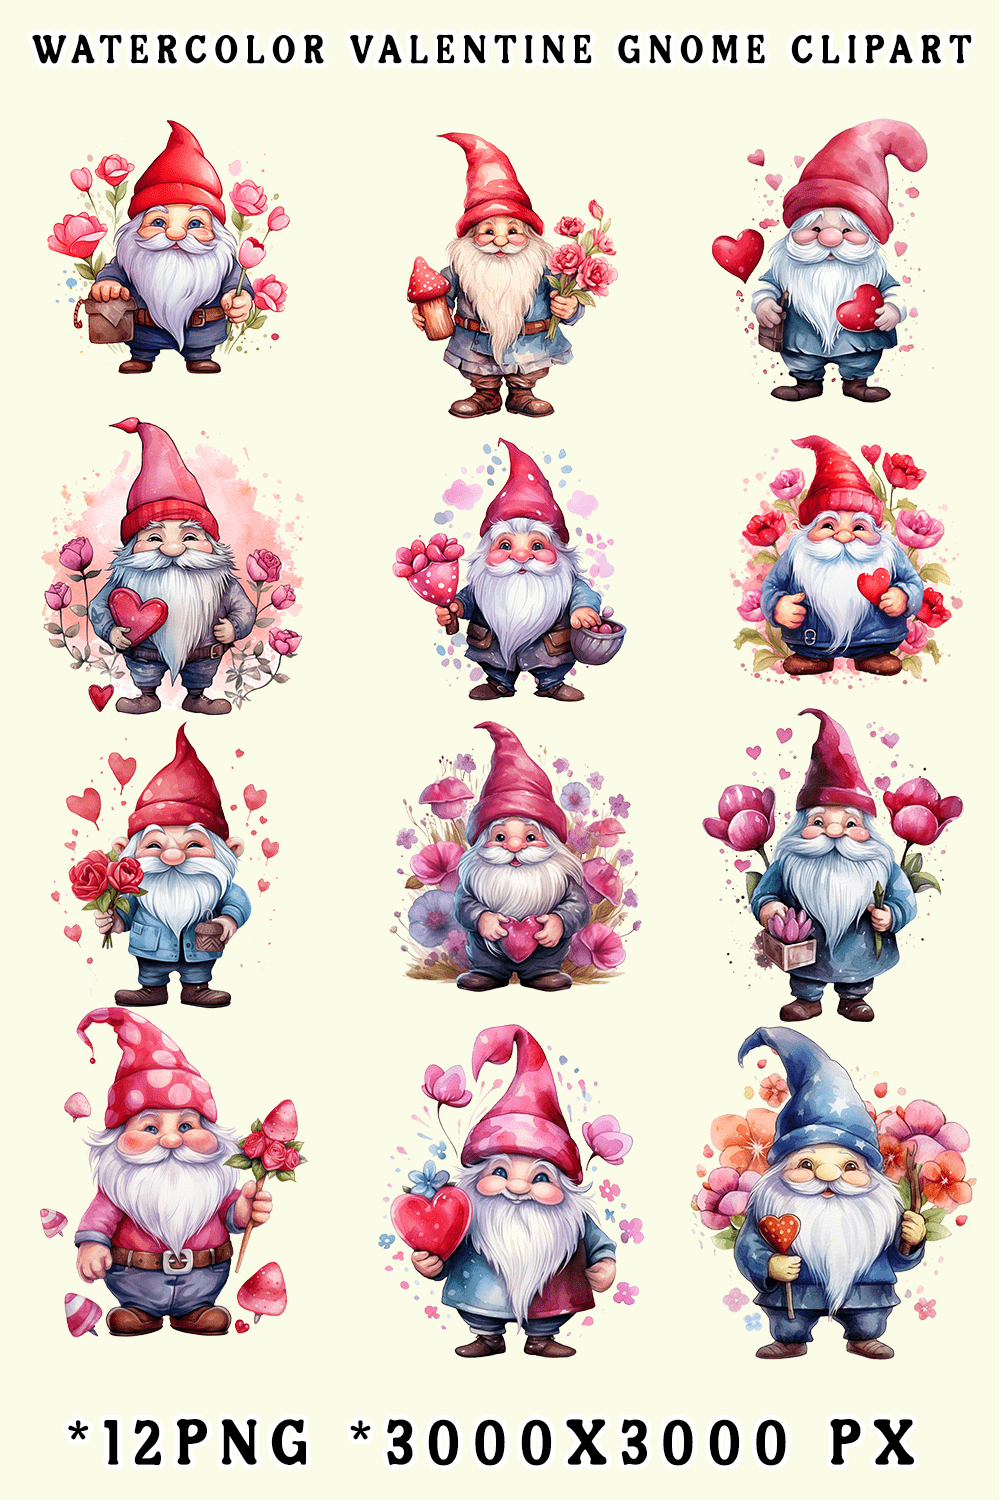 Watercolor Valentine Gnome Clipart pinterest preview image.